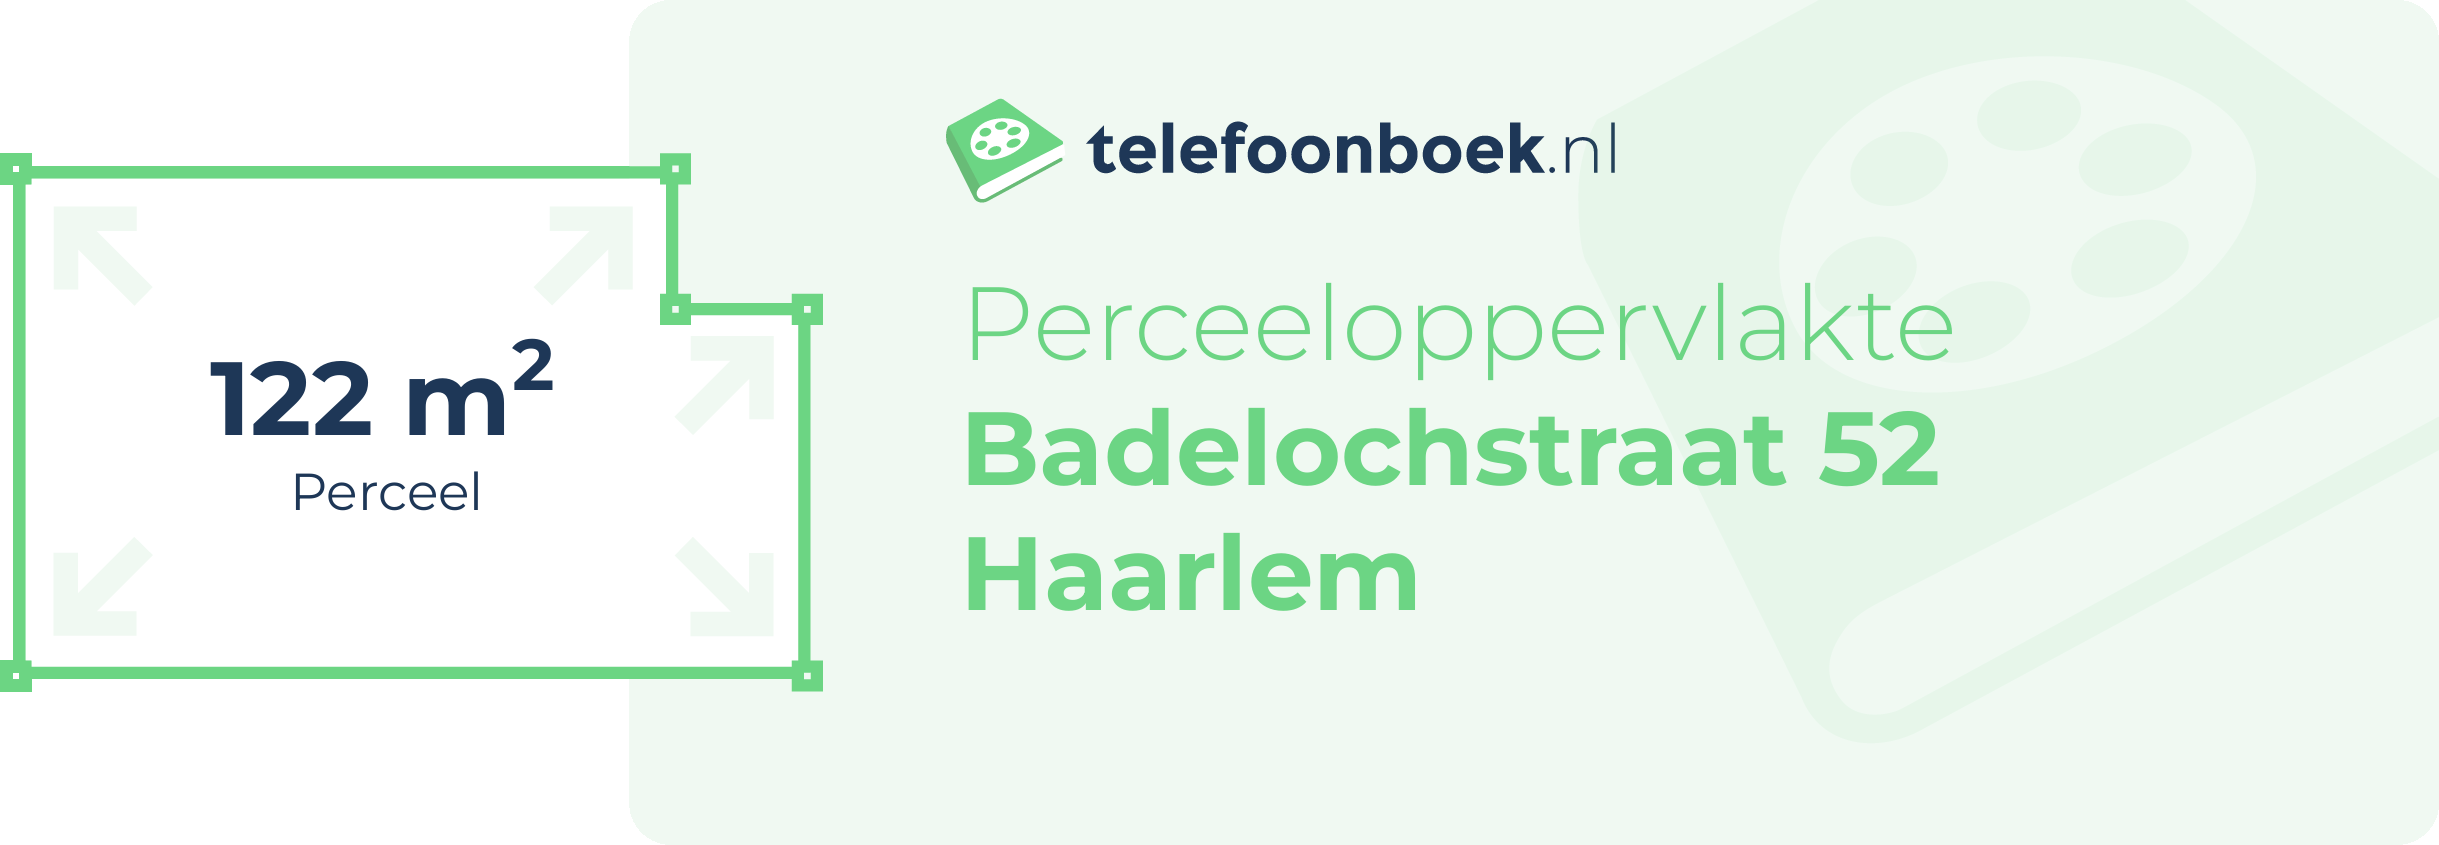 Perceeloppervlakte Badelochstraat 52 Haarlem